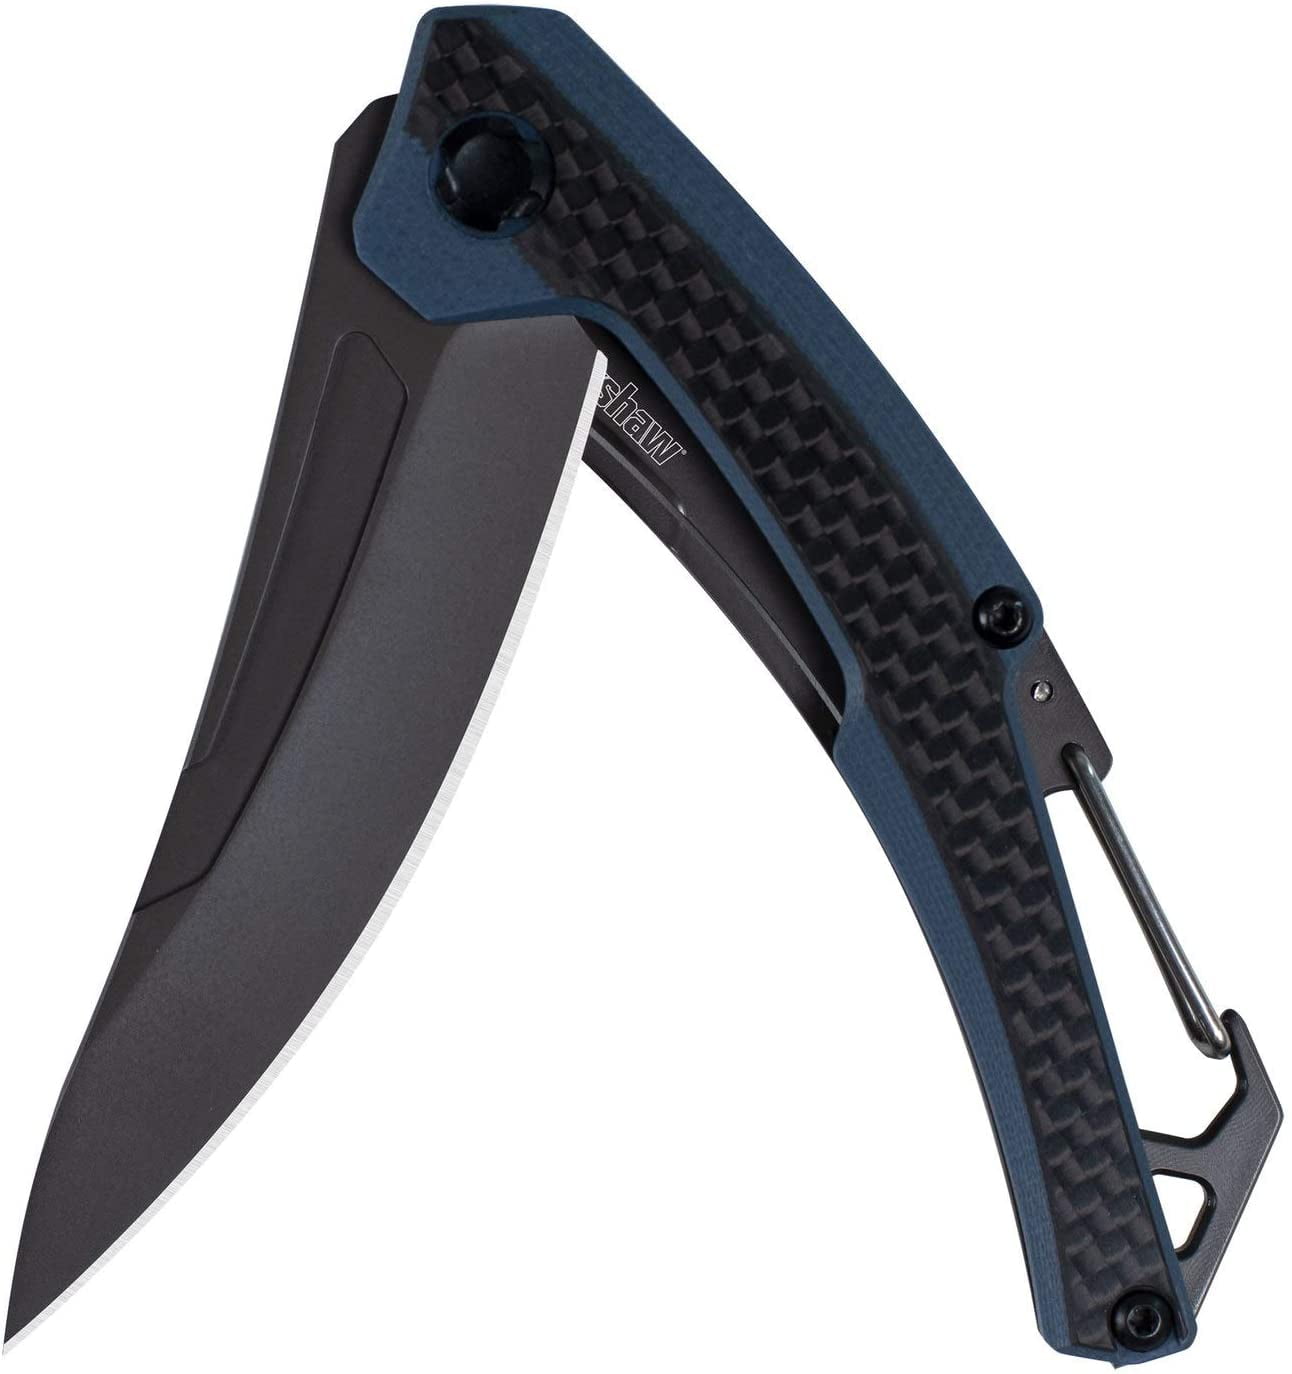 Kershaw Reverb XL Manual Knife, Black Lightweight 3 inch Blade, Carbon Fiber Overlay, Carabiner